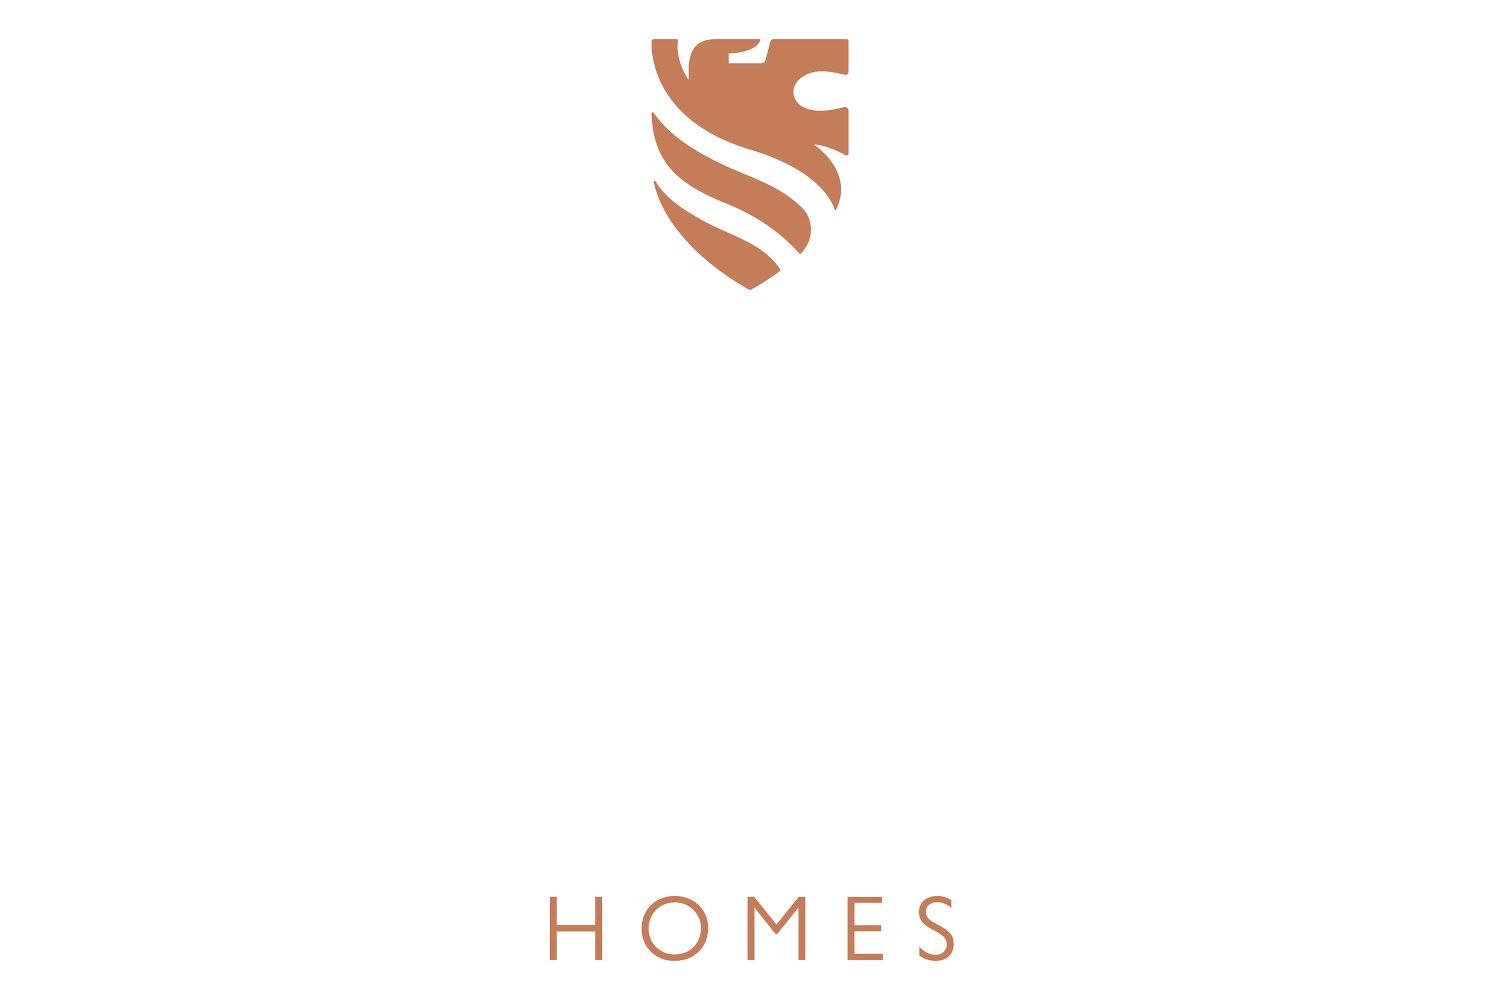 Charles Douglas